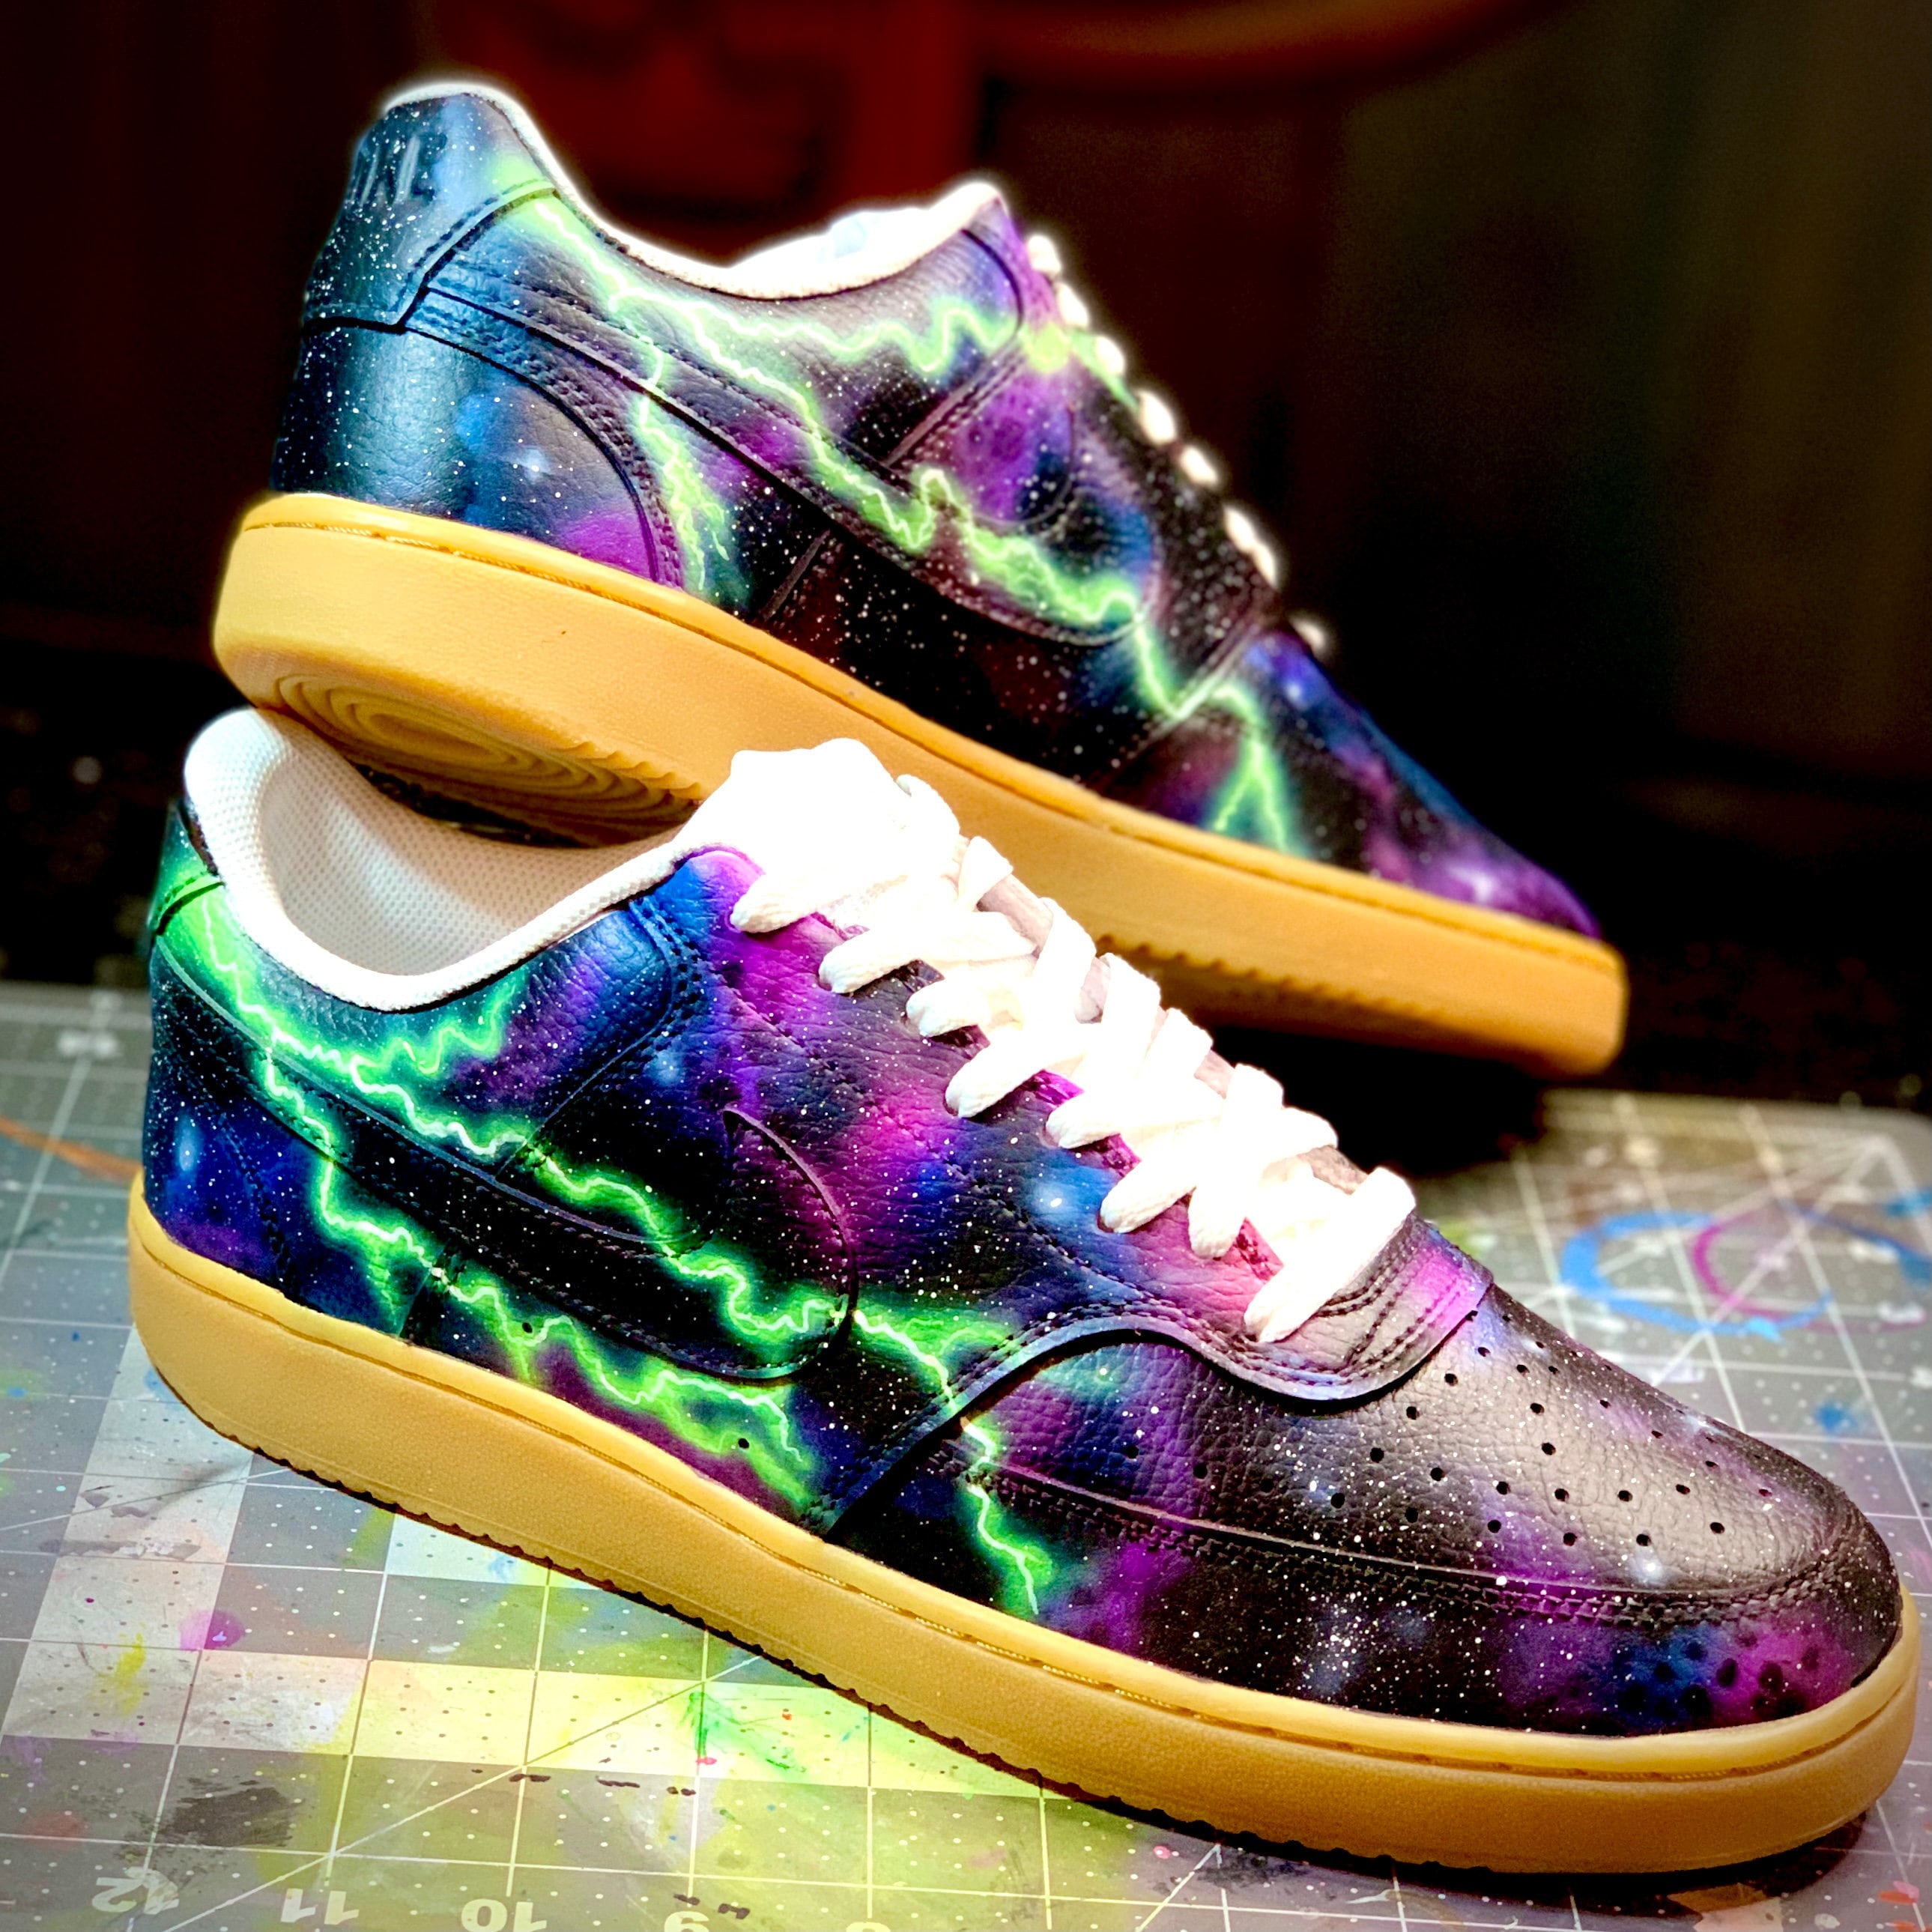 Custom Nike Shoes #graffiti #custom - Airbrush Brothers